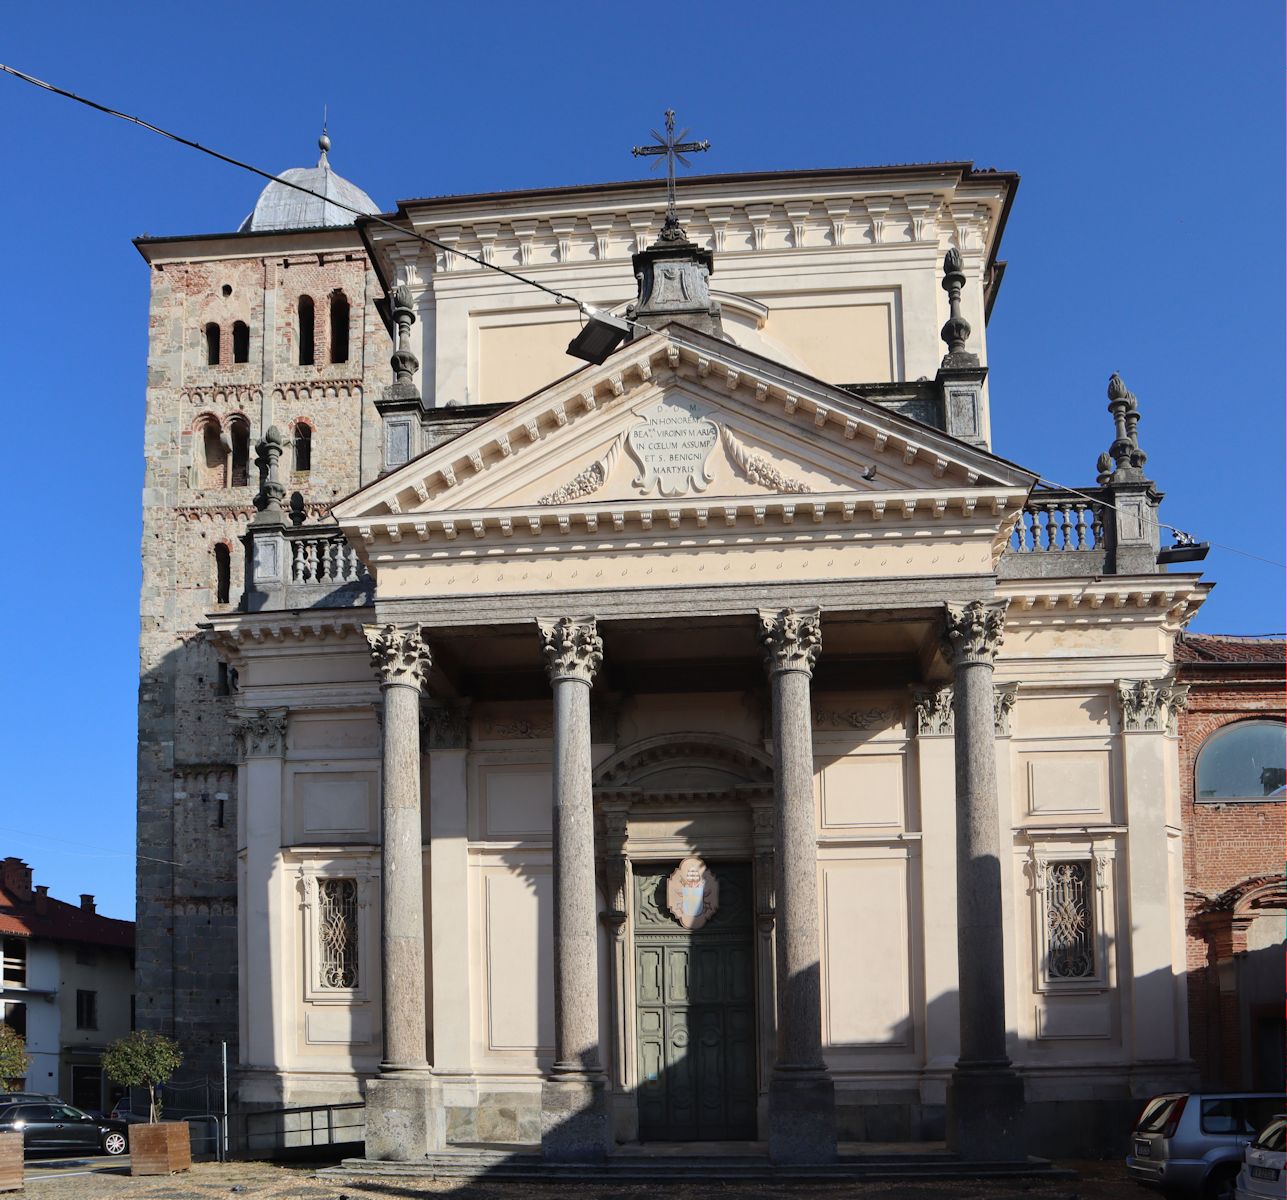 Kirche der ehemaligen Abtei Fruttuaria in San Benigno Canavese